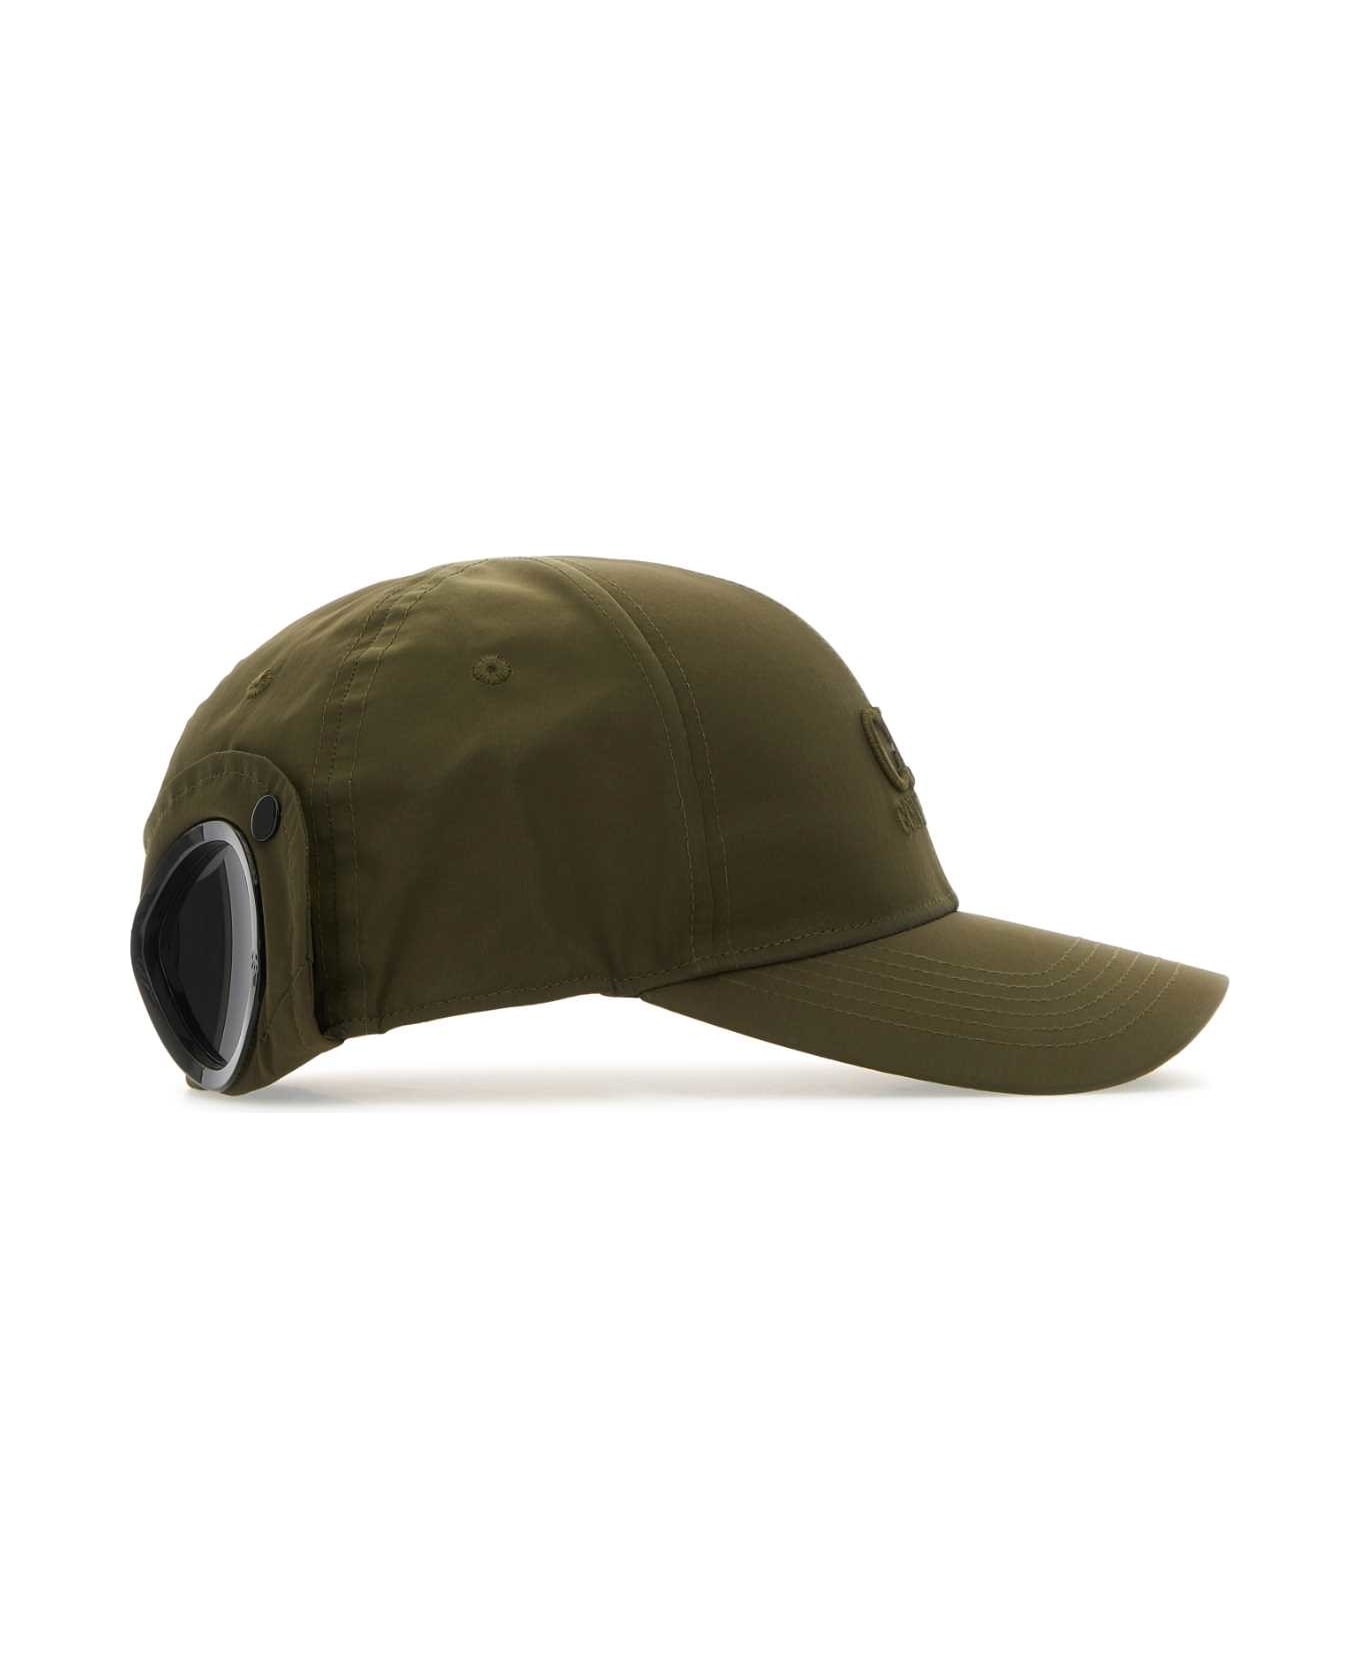 Army Green Nylon Baseball Cap - 2